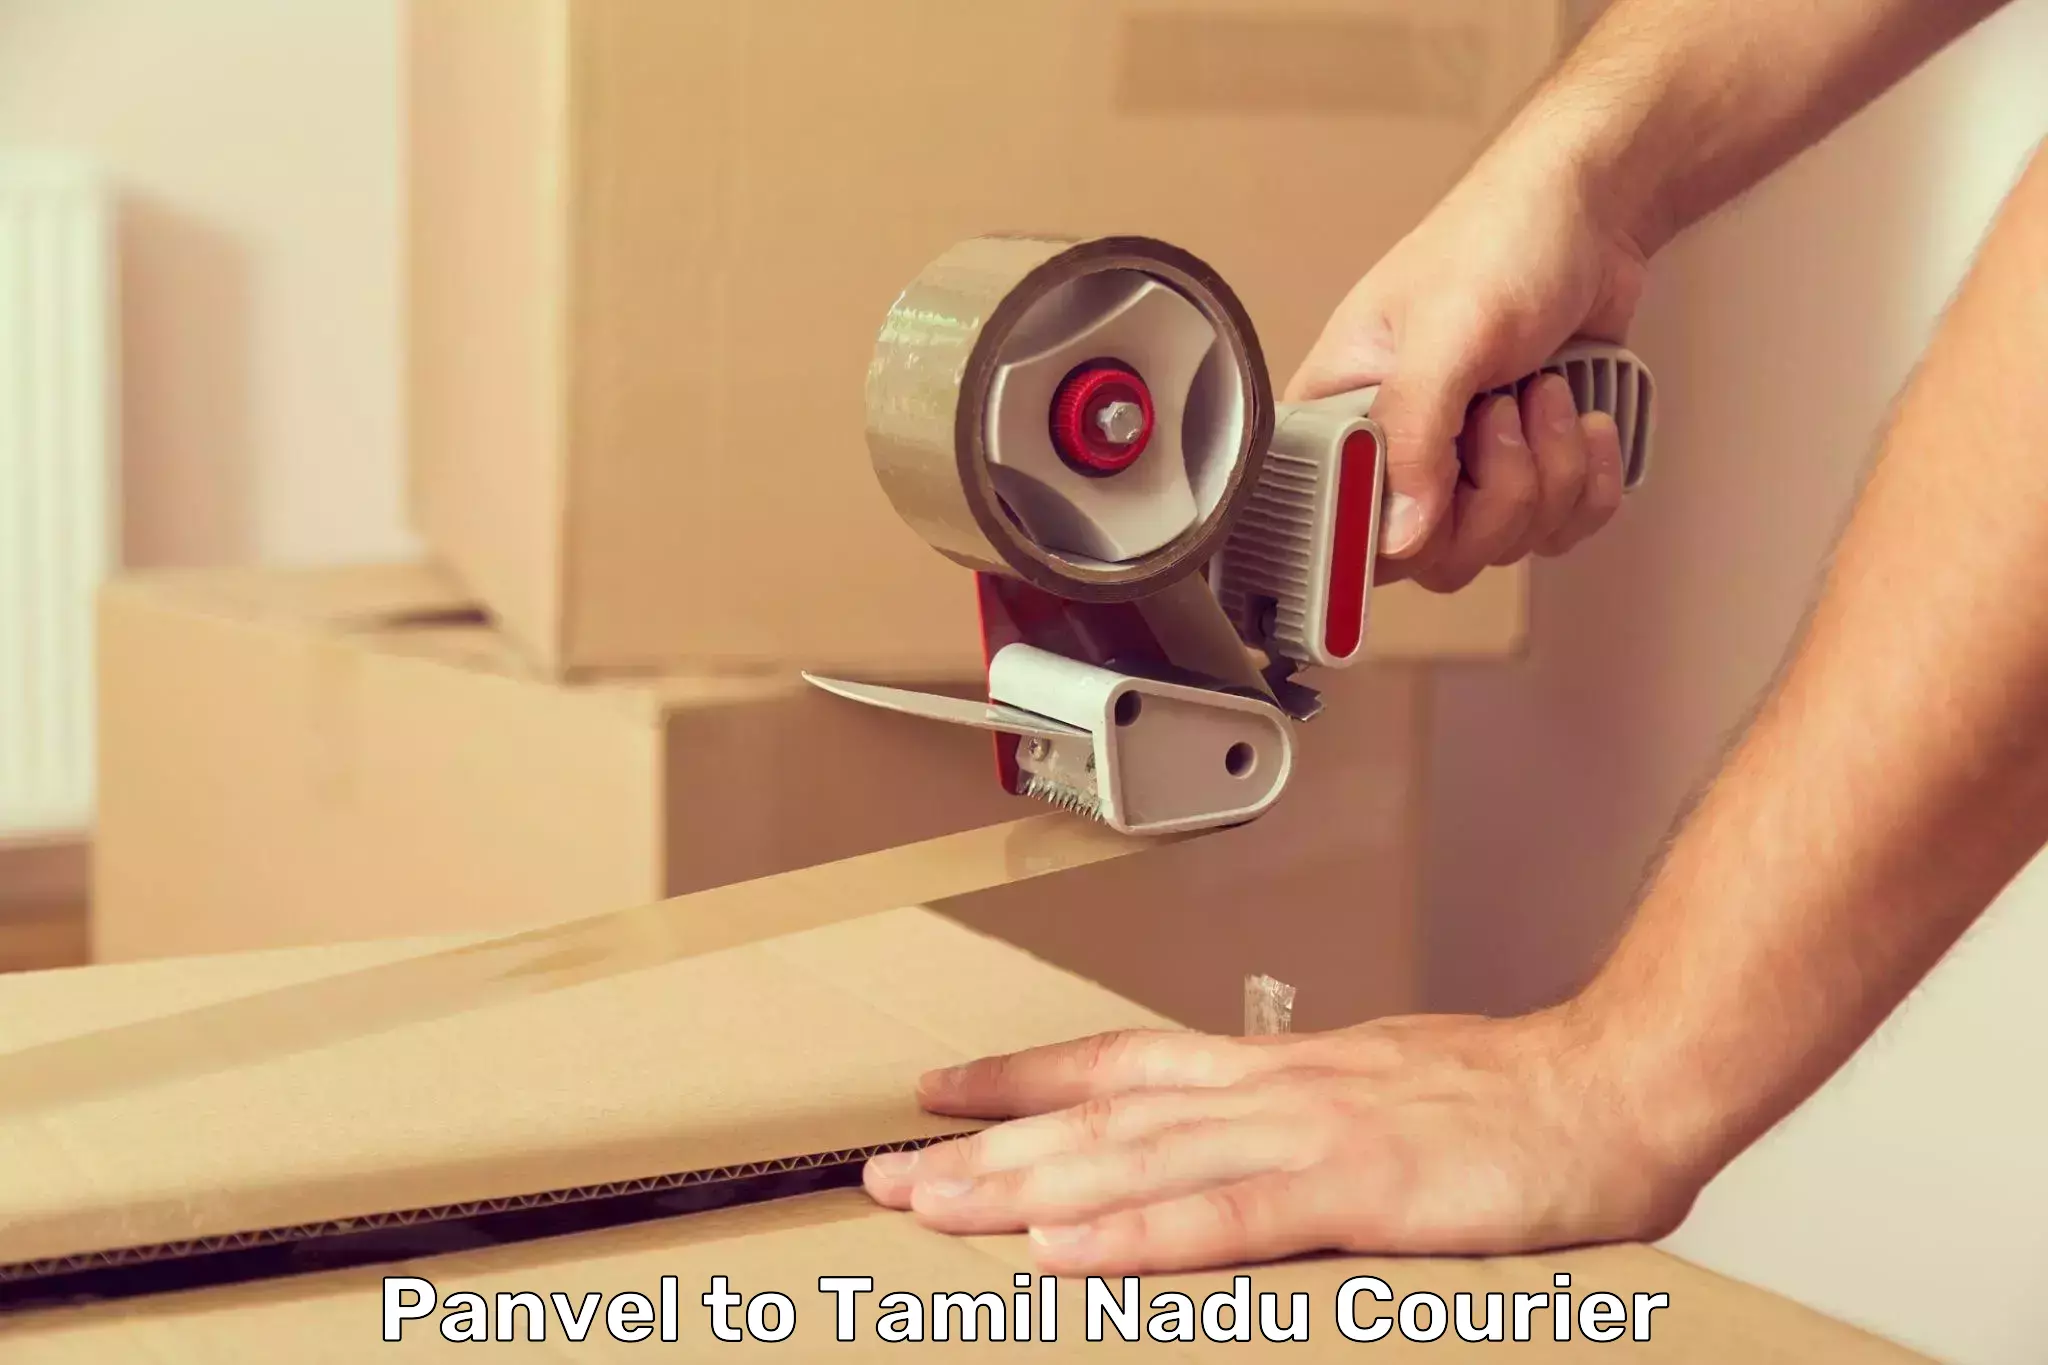 Easy return solutions Panvel to Tamil Nadu